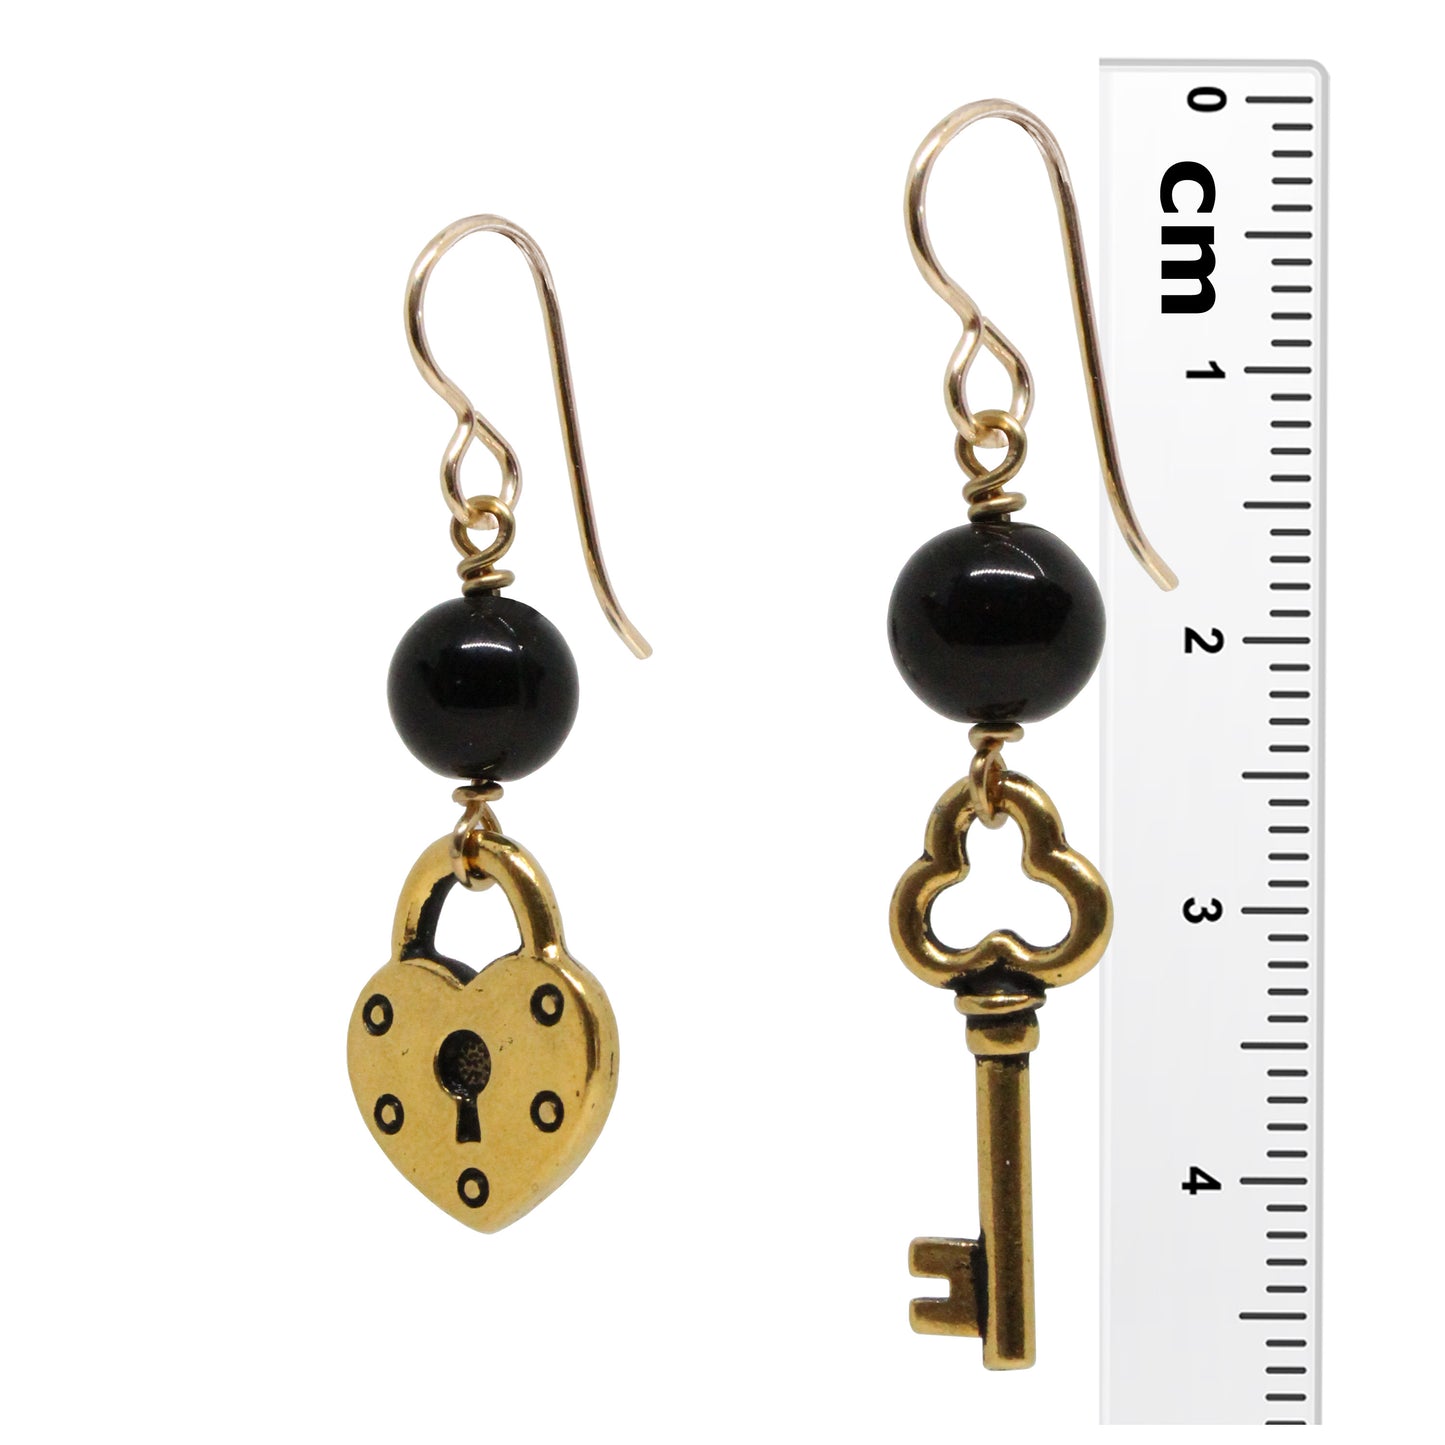 Lock and Key Earrings / 47mm length / gold filled earwires / choose from angelite, aventurine, black onyx, carnelian, garnet, pink opal